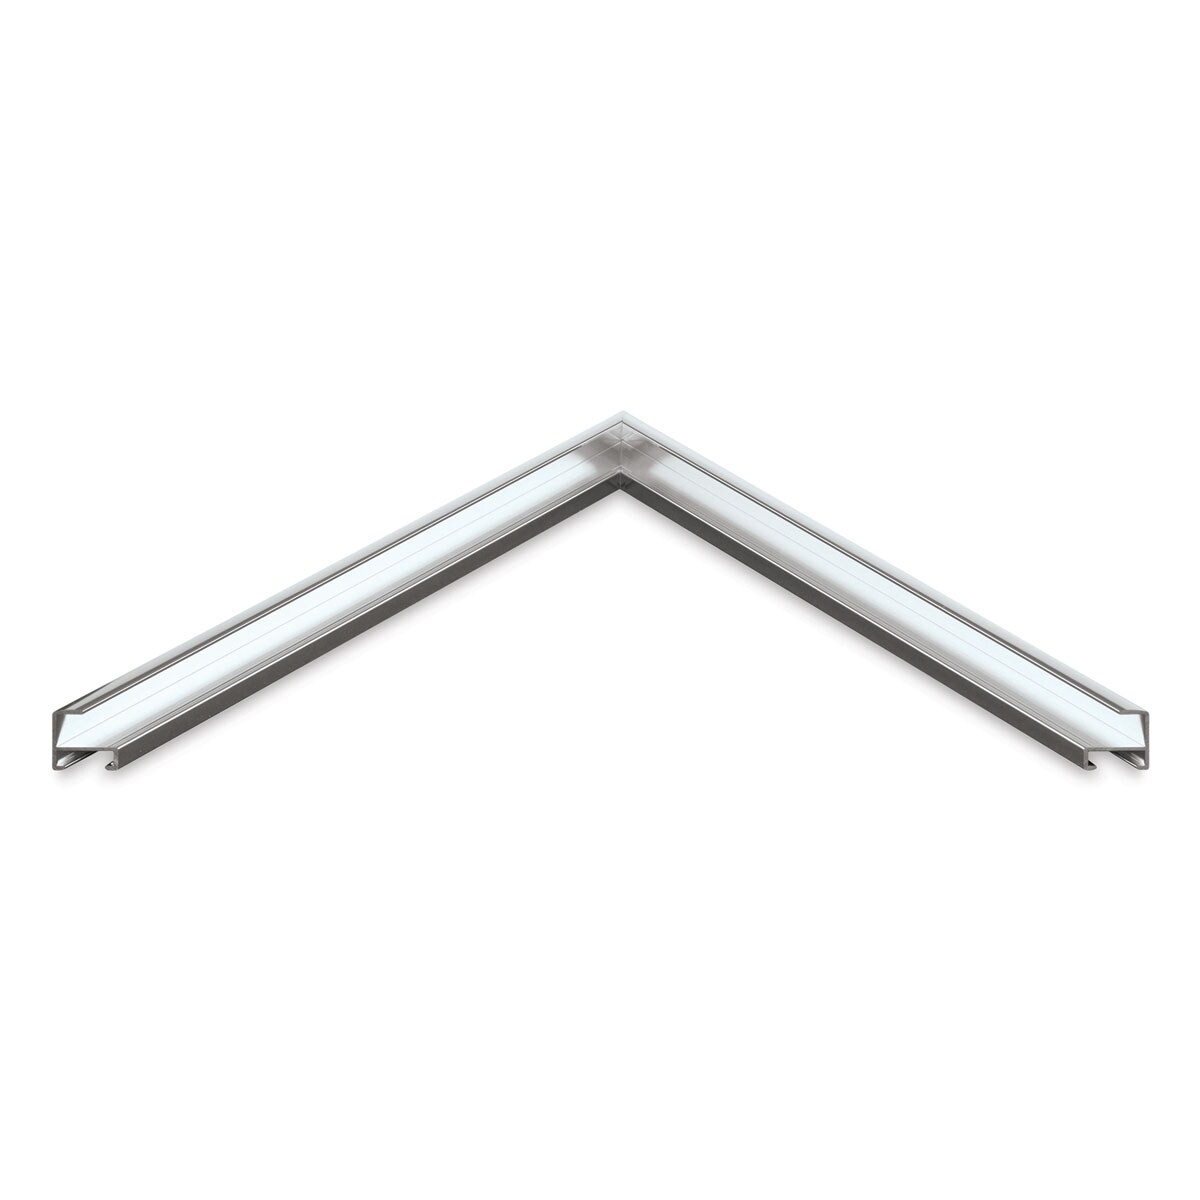 Nielsen Bainbridge Metal Frame Kit-14” x 7/16”, Silver, 2 Bars